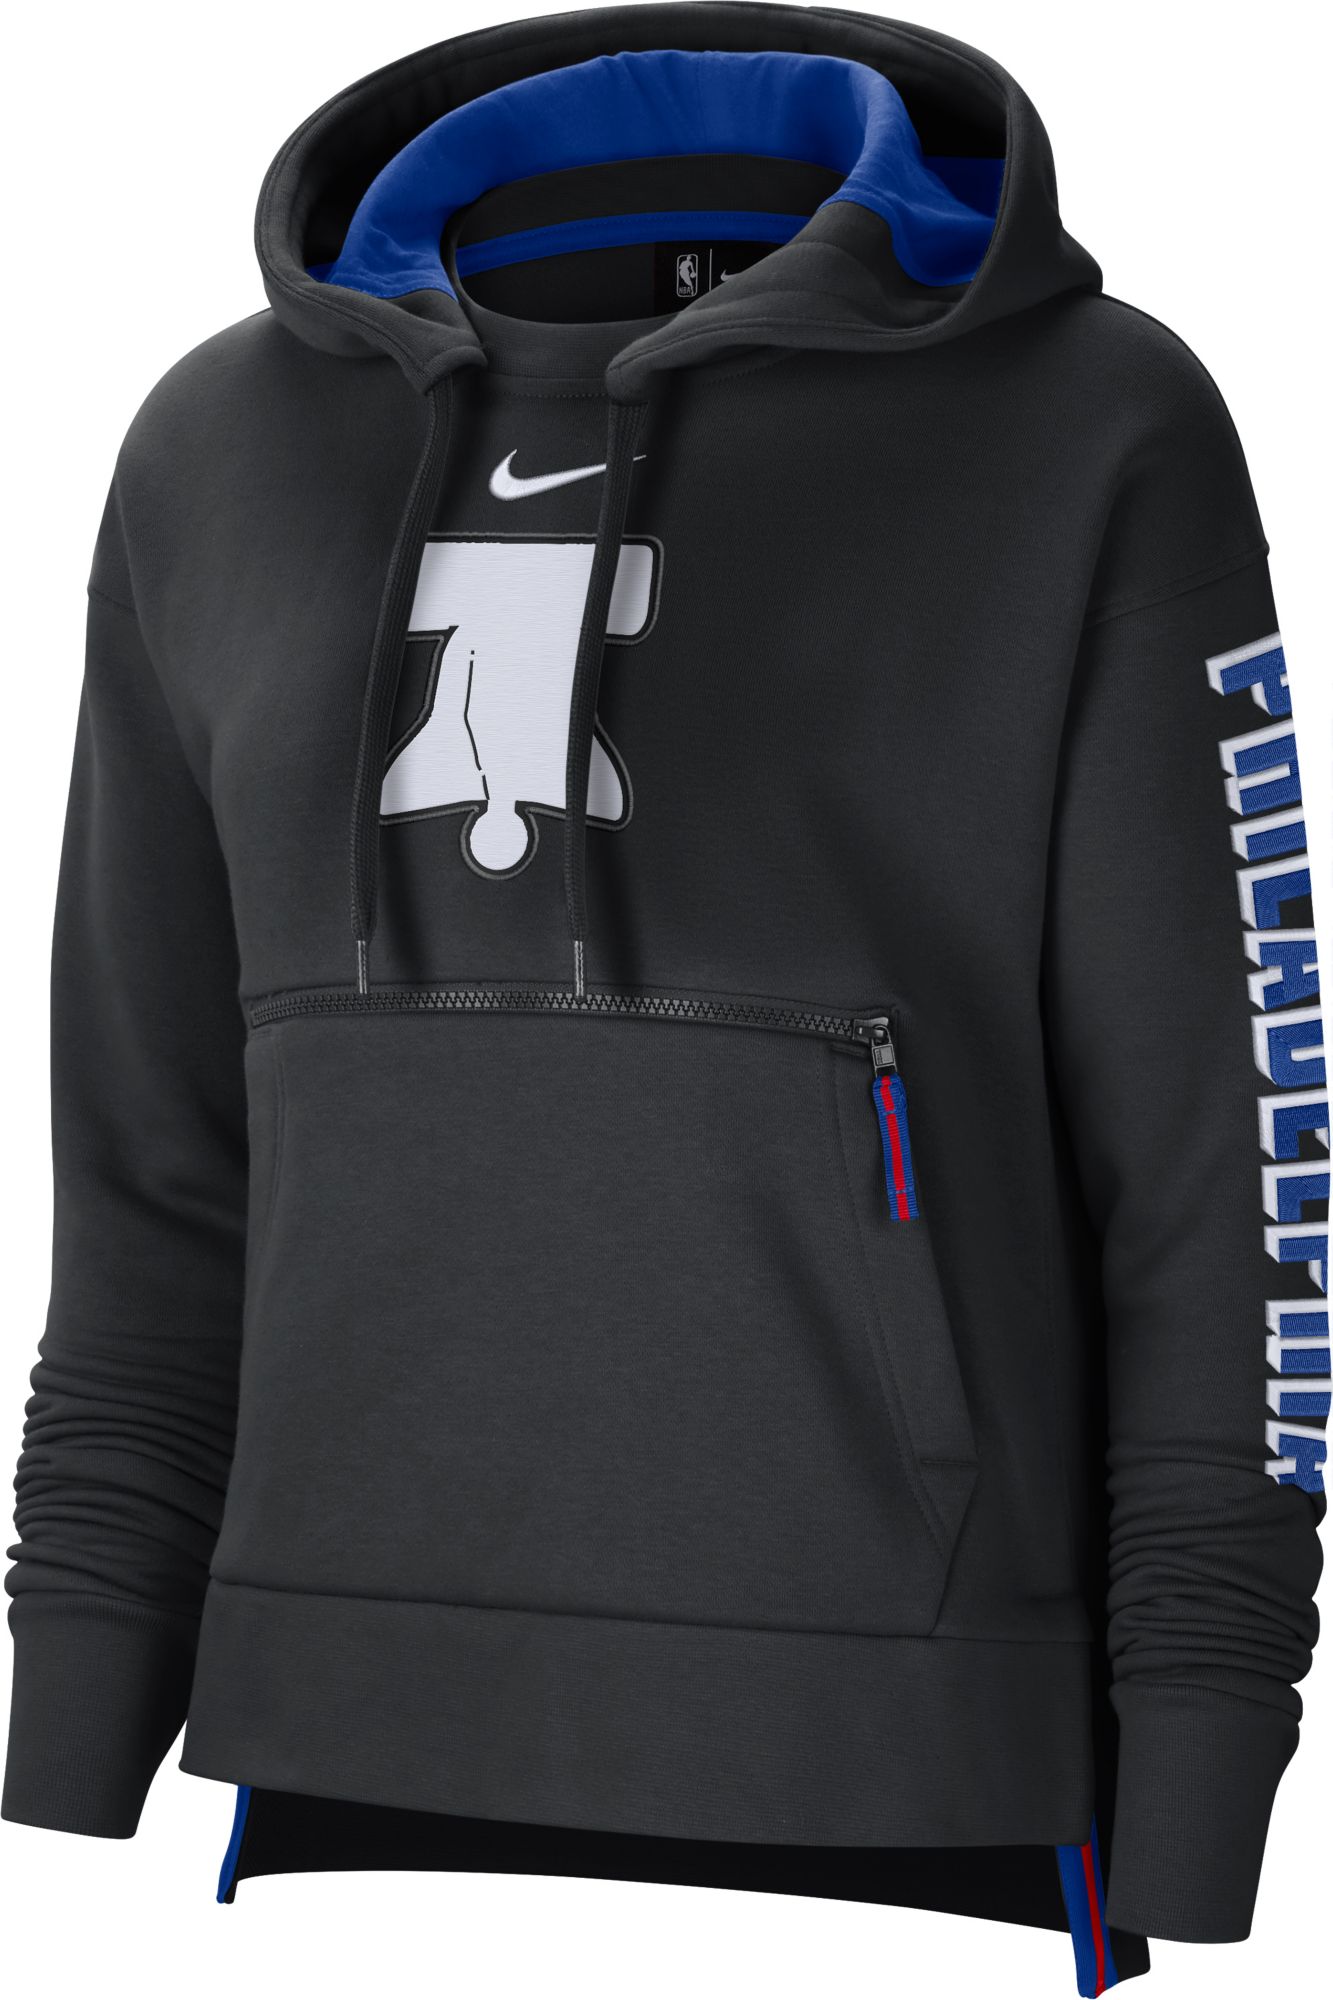 76ers city edition hoodie